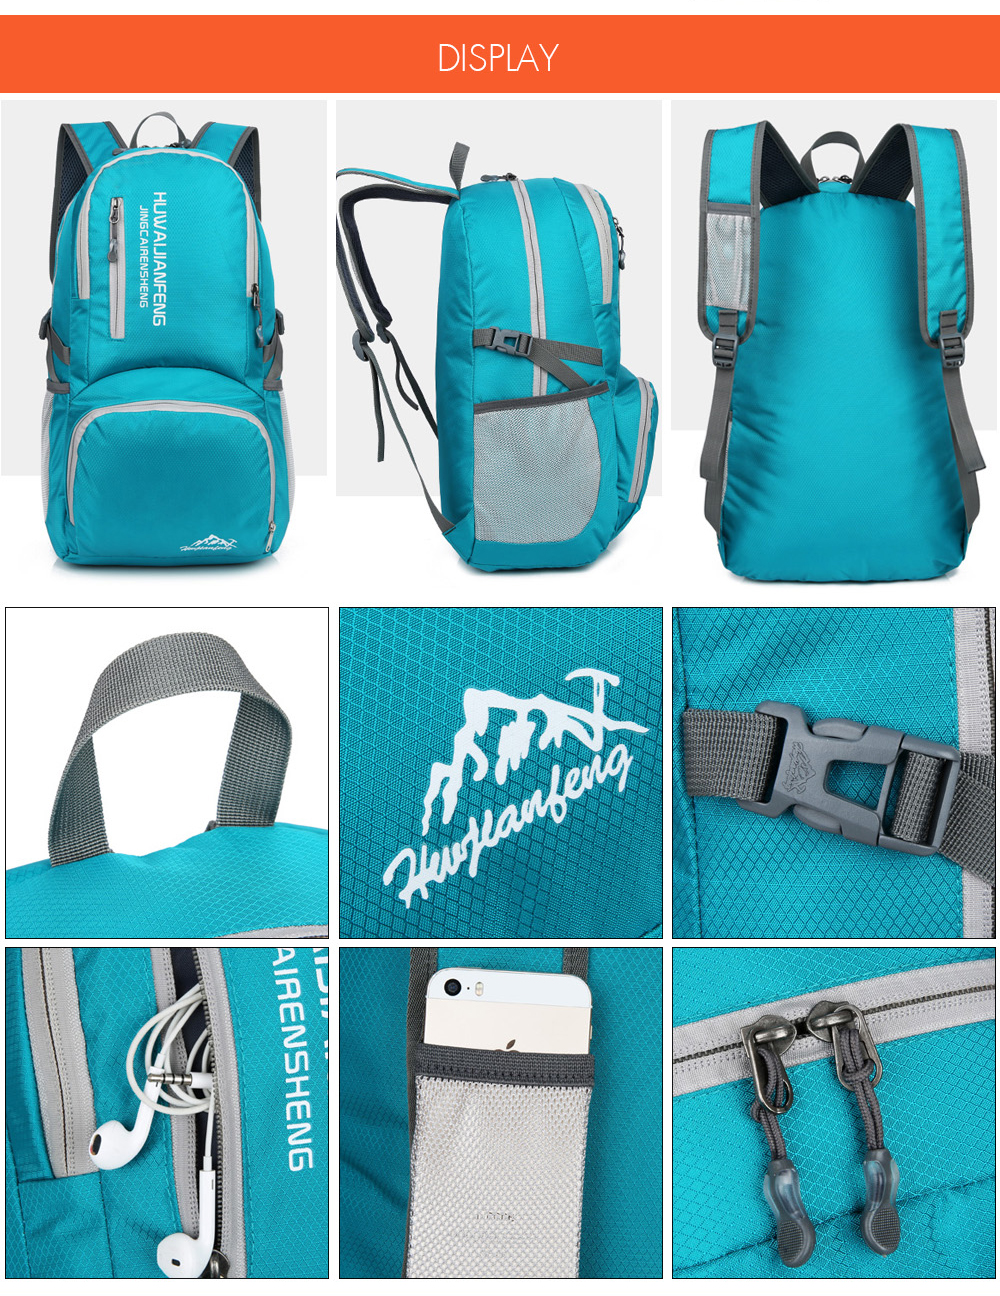 HUWAIJIANFENG Foldable Wear-resistant Fashion Backpack for Men